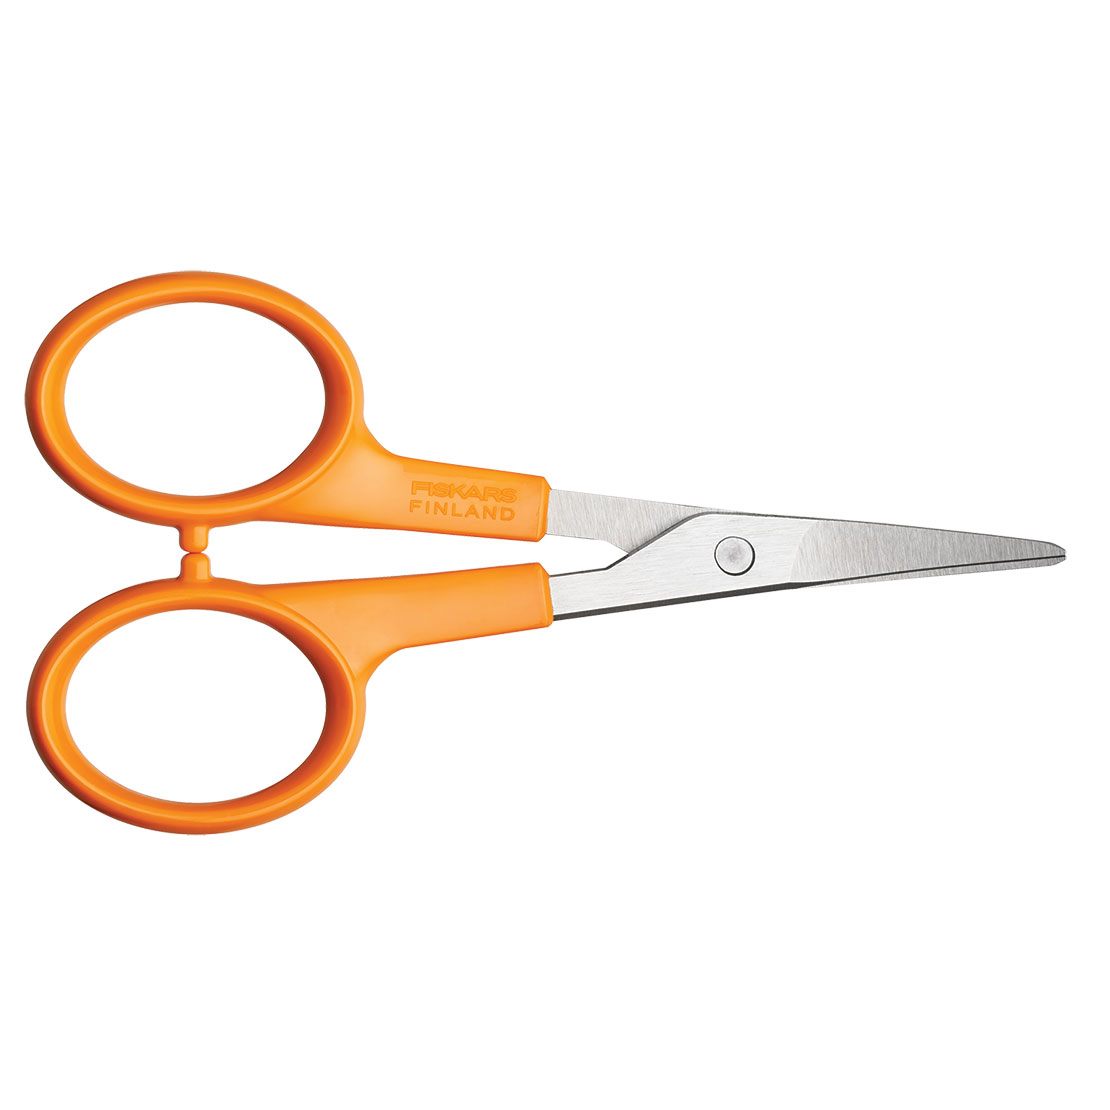 https://www.fiskars.es/var/fiskars_main/storage/images/frontpage/products/scissors/classic-precision-curved-scissors-10cm-1005144/78041-53-eng-EU/classic-precision-curved-scissors-10cm-1005144.jpg